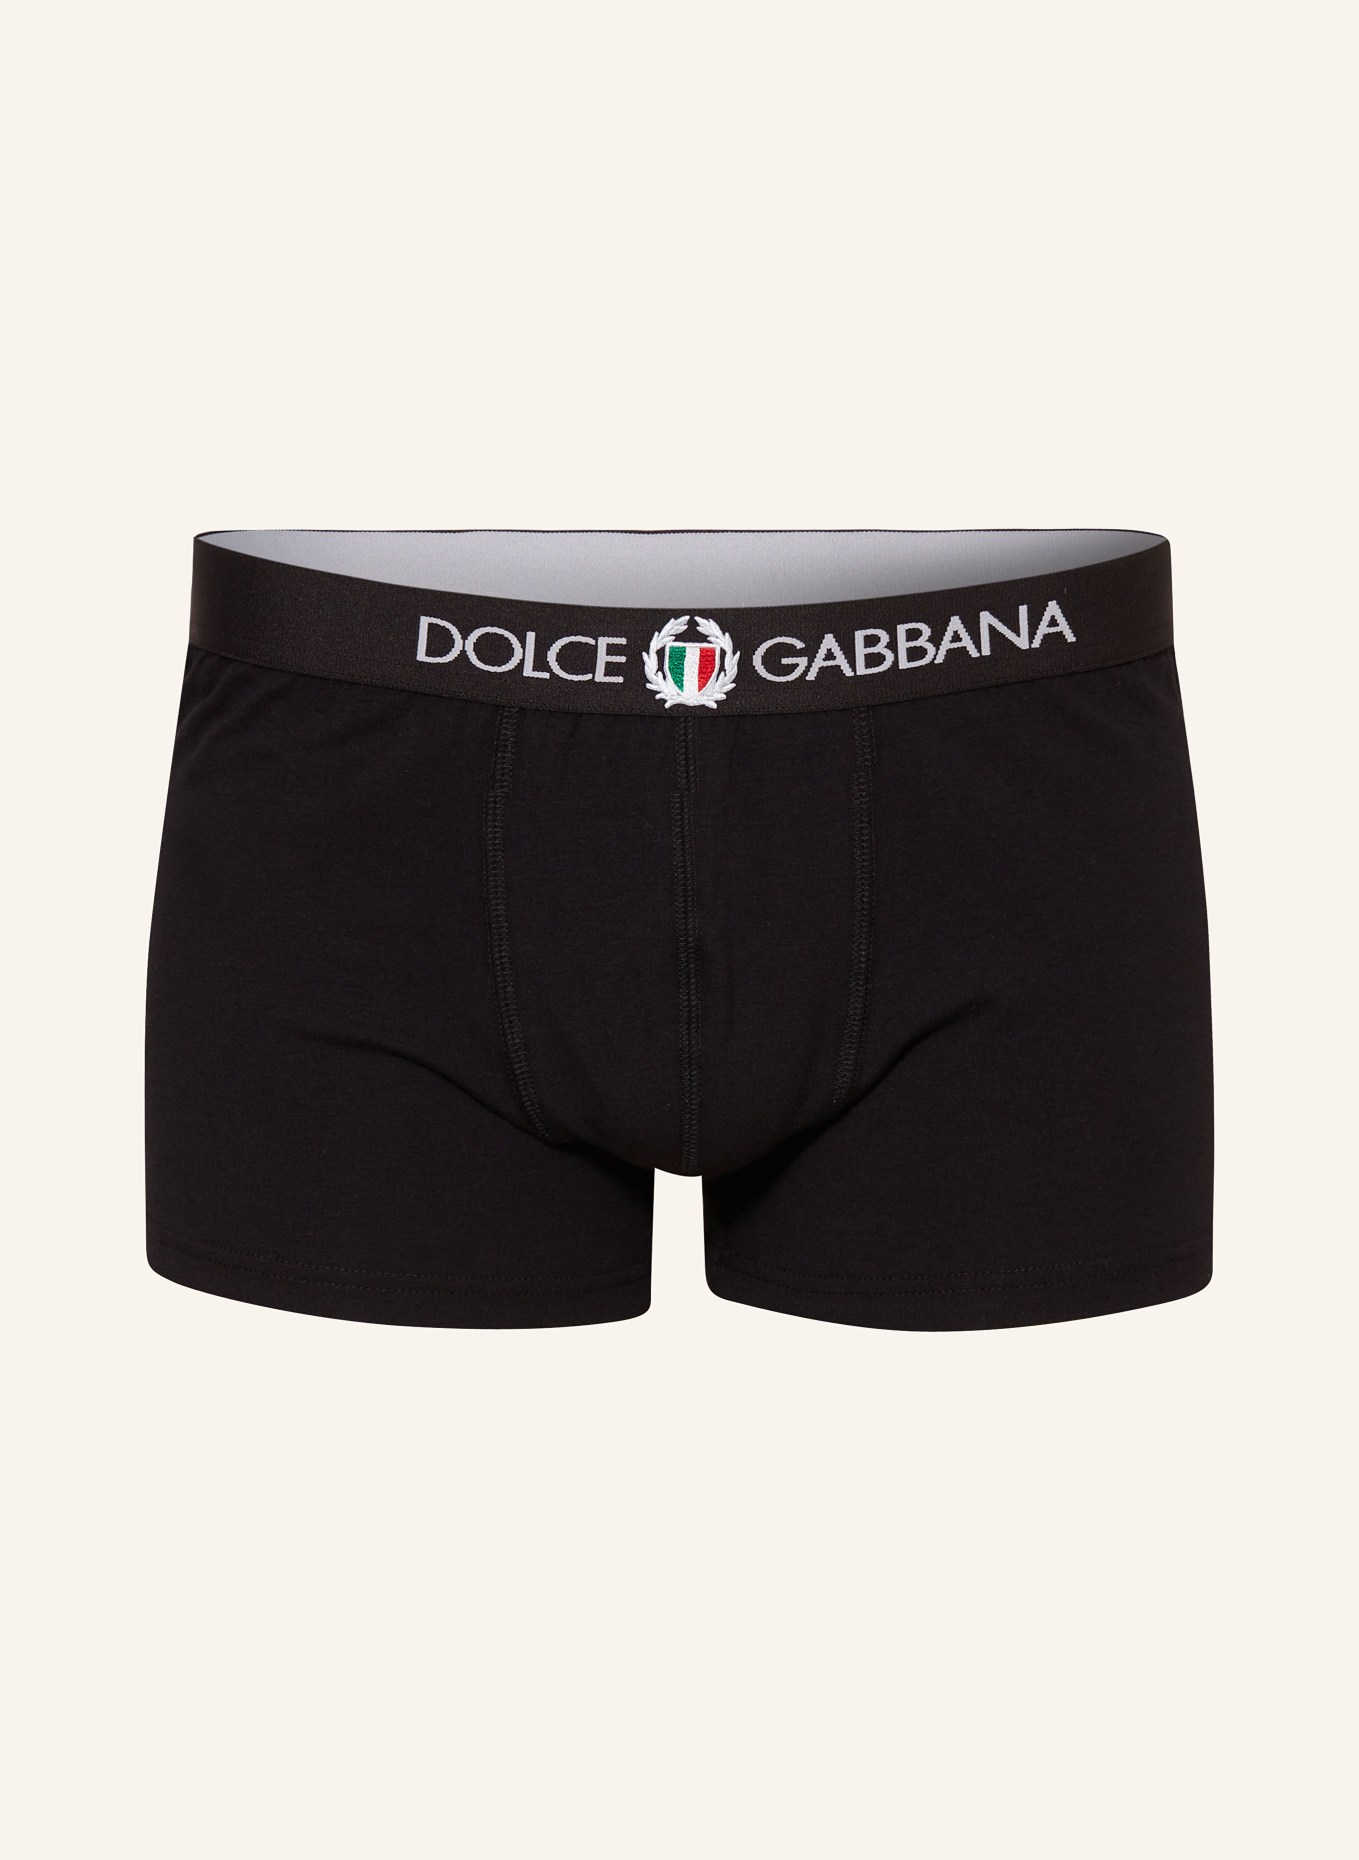 DOLCE & GABBANA Boxershorts, Farbe: SCHWARZ (Bild 1)